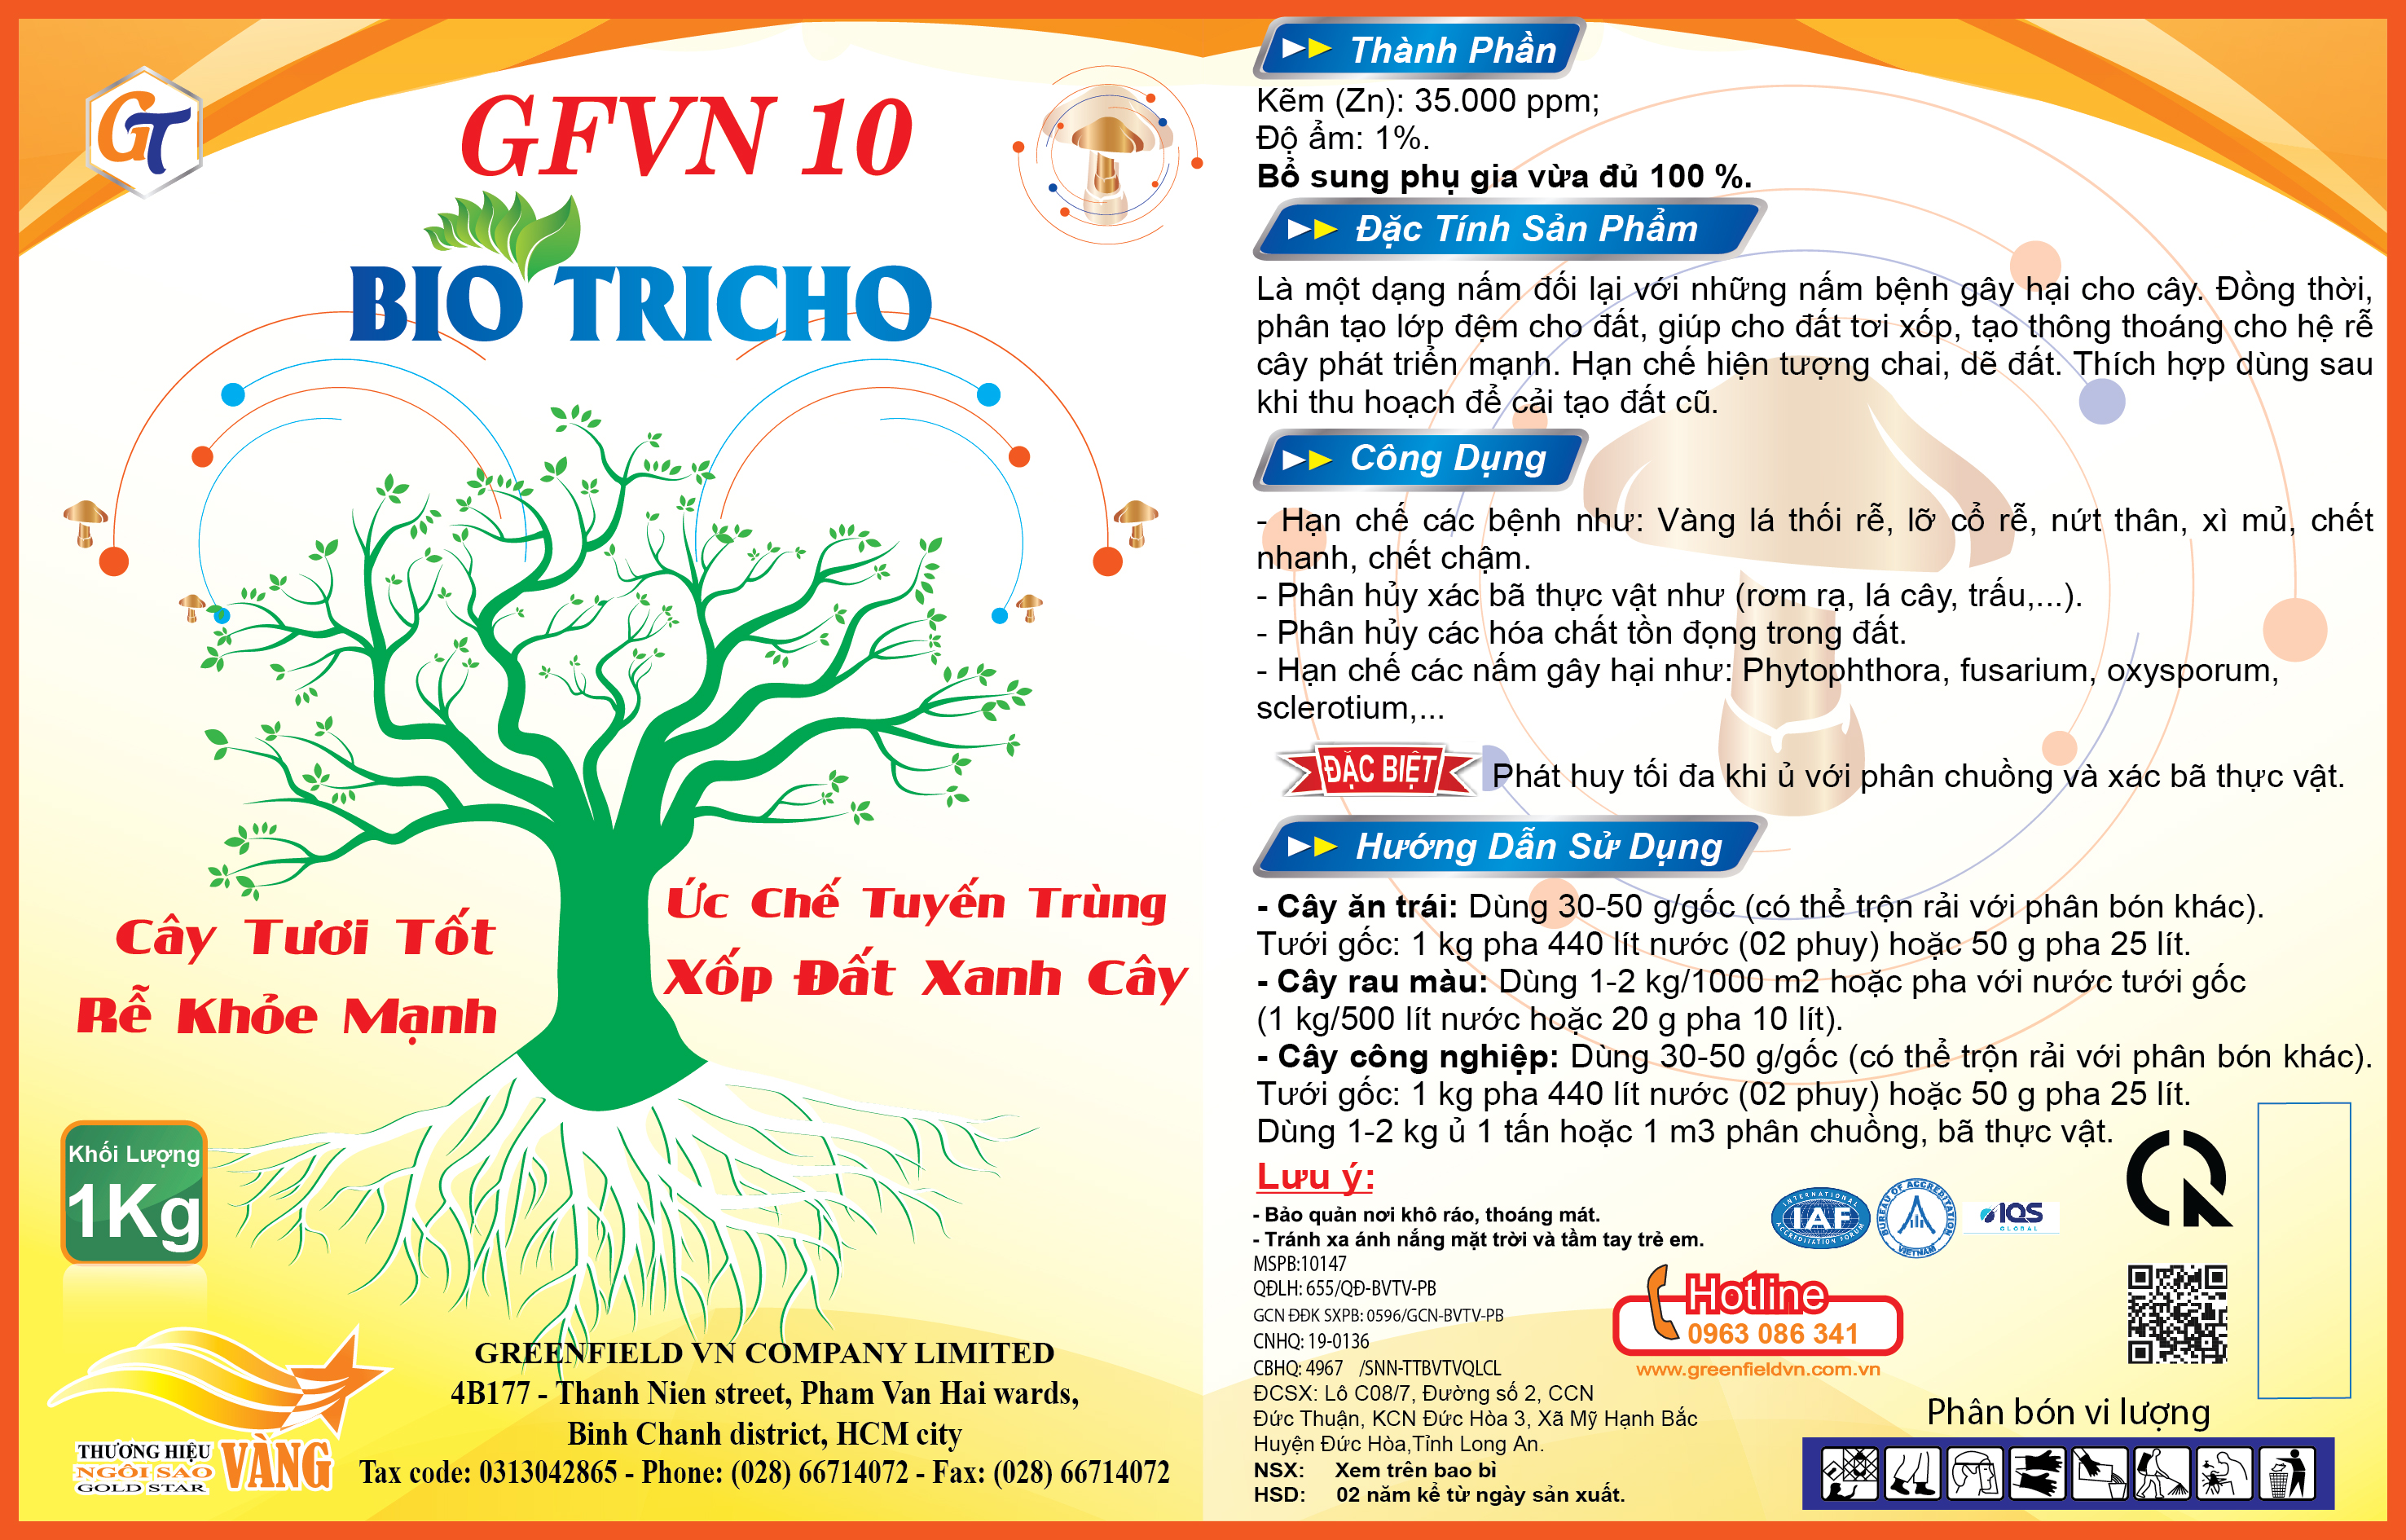 BIO TRICHO (Nấm) SV - GFVN 10